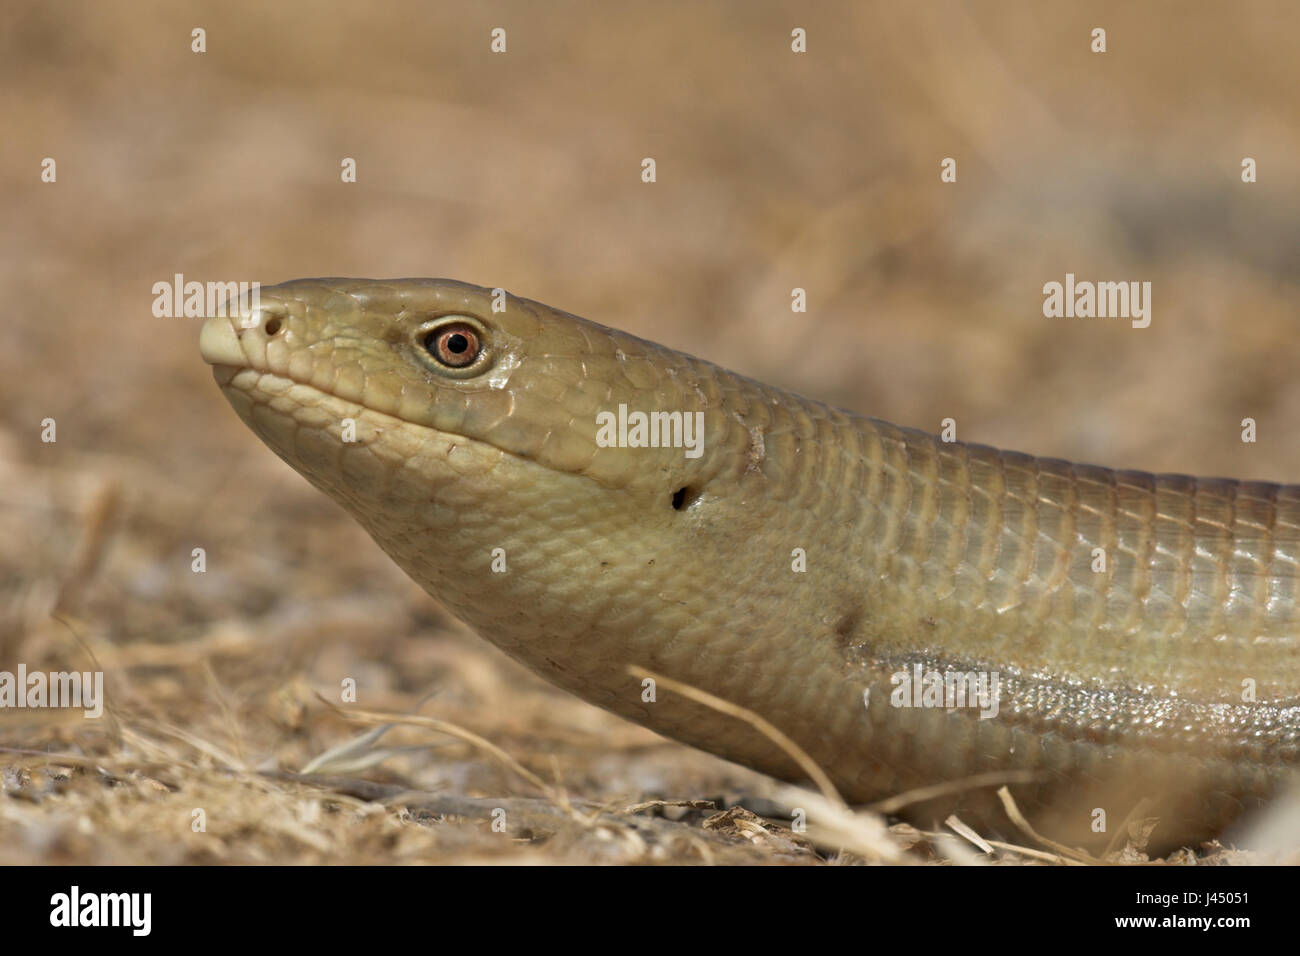 portrait of a European glass lizard Stock Photo